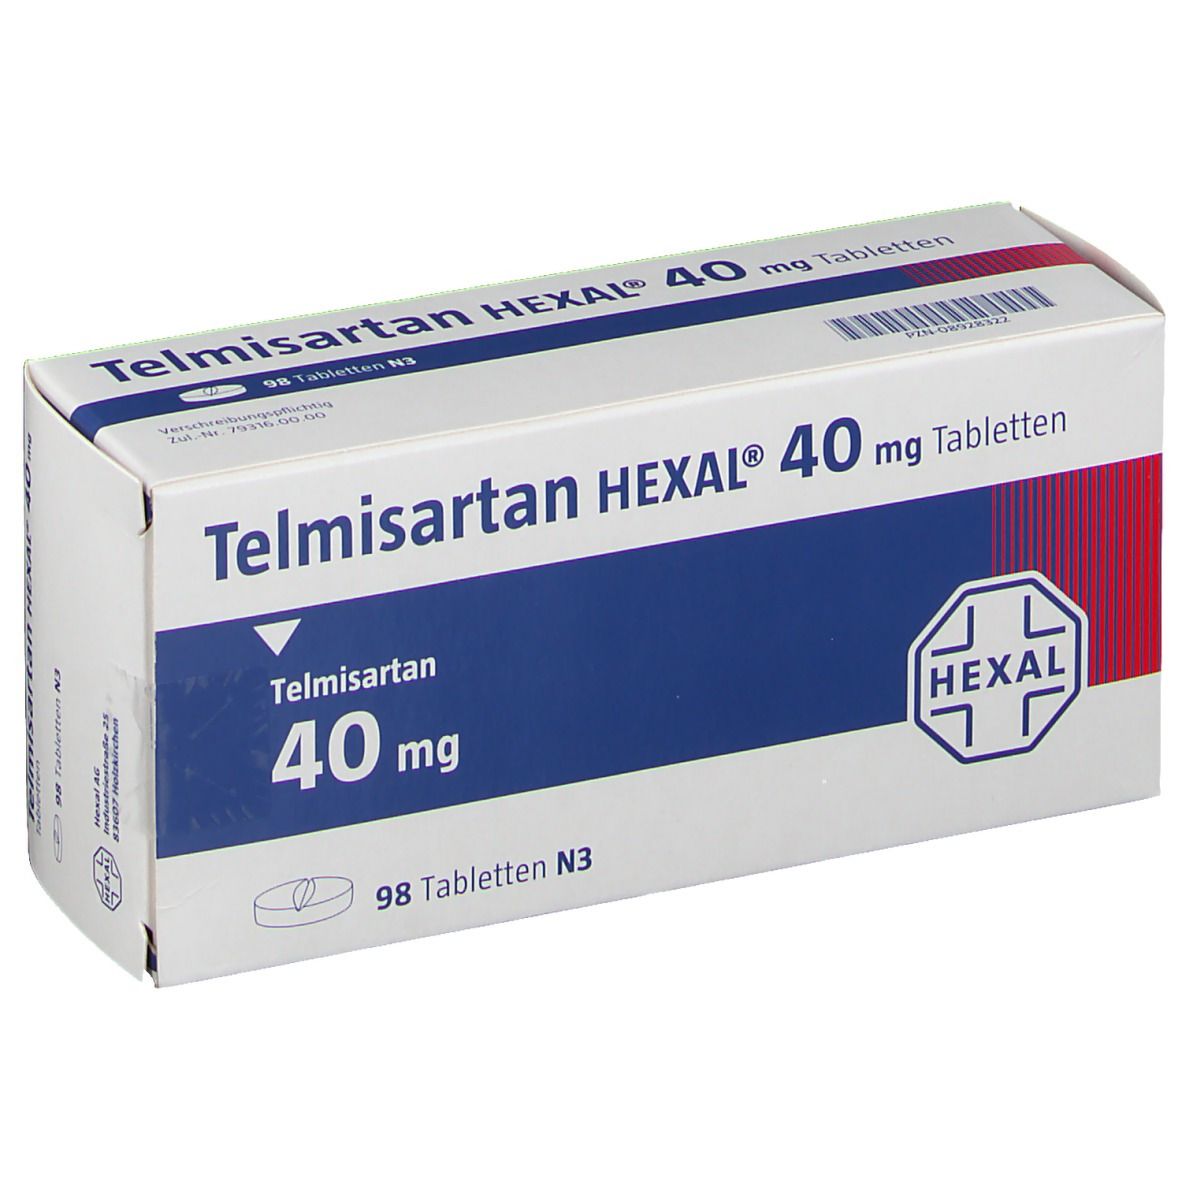 Telmisartan HEXAL® 40 mg